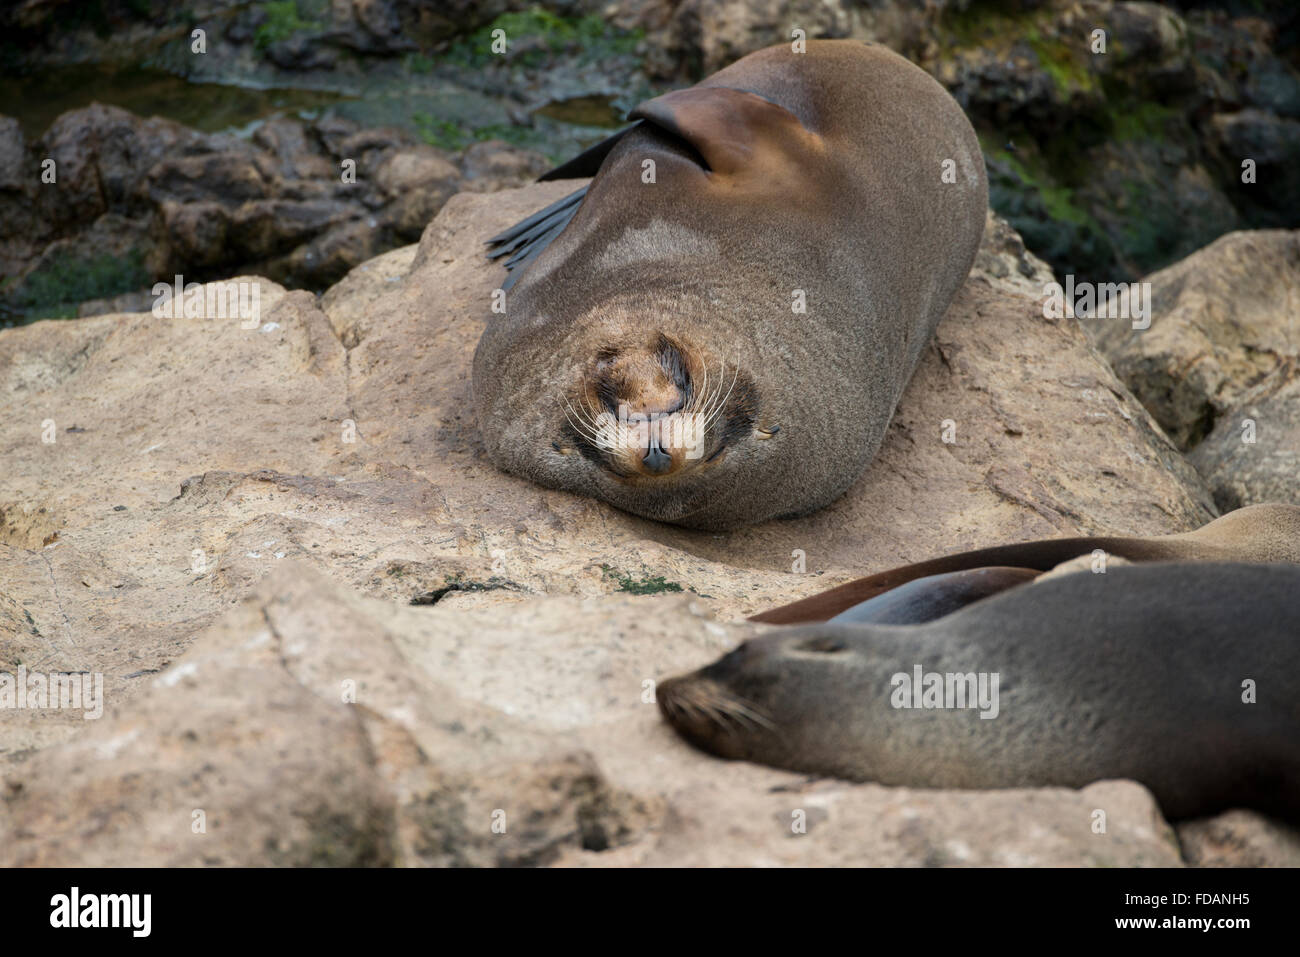 New Zealand, South Island, Dunedin, Otago Peninsula. New Zealand fur seals (Arctocephalus forsteri). Stock Photo